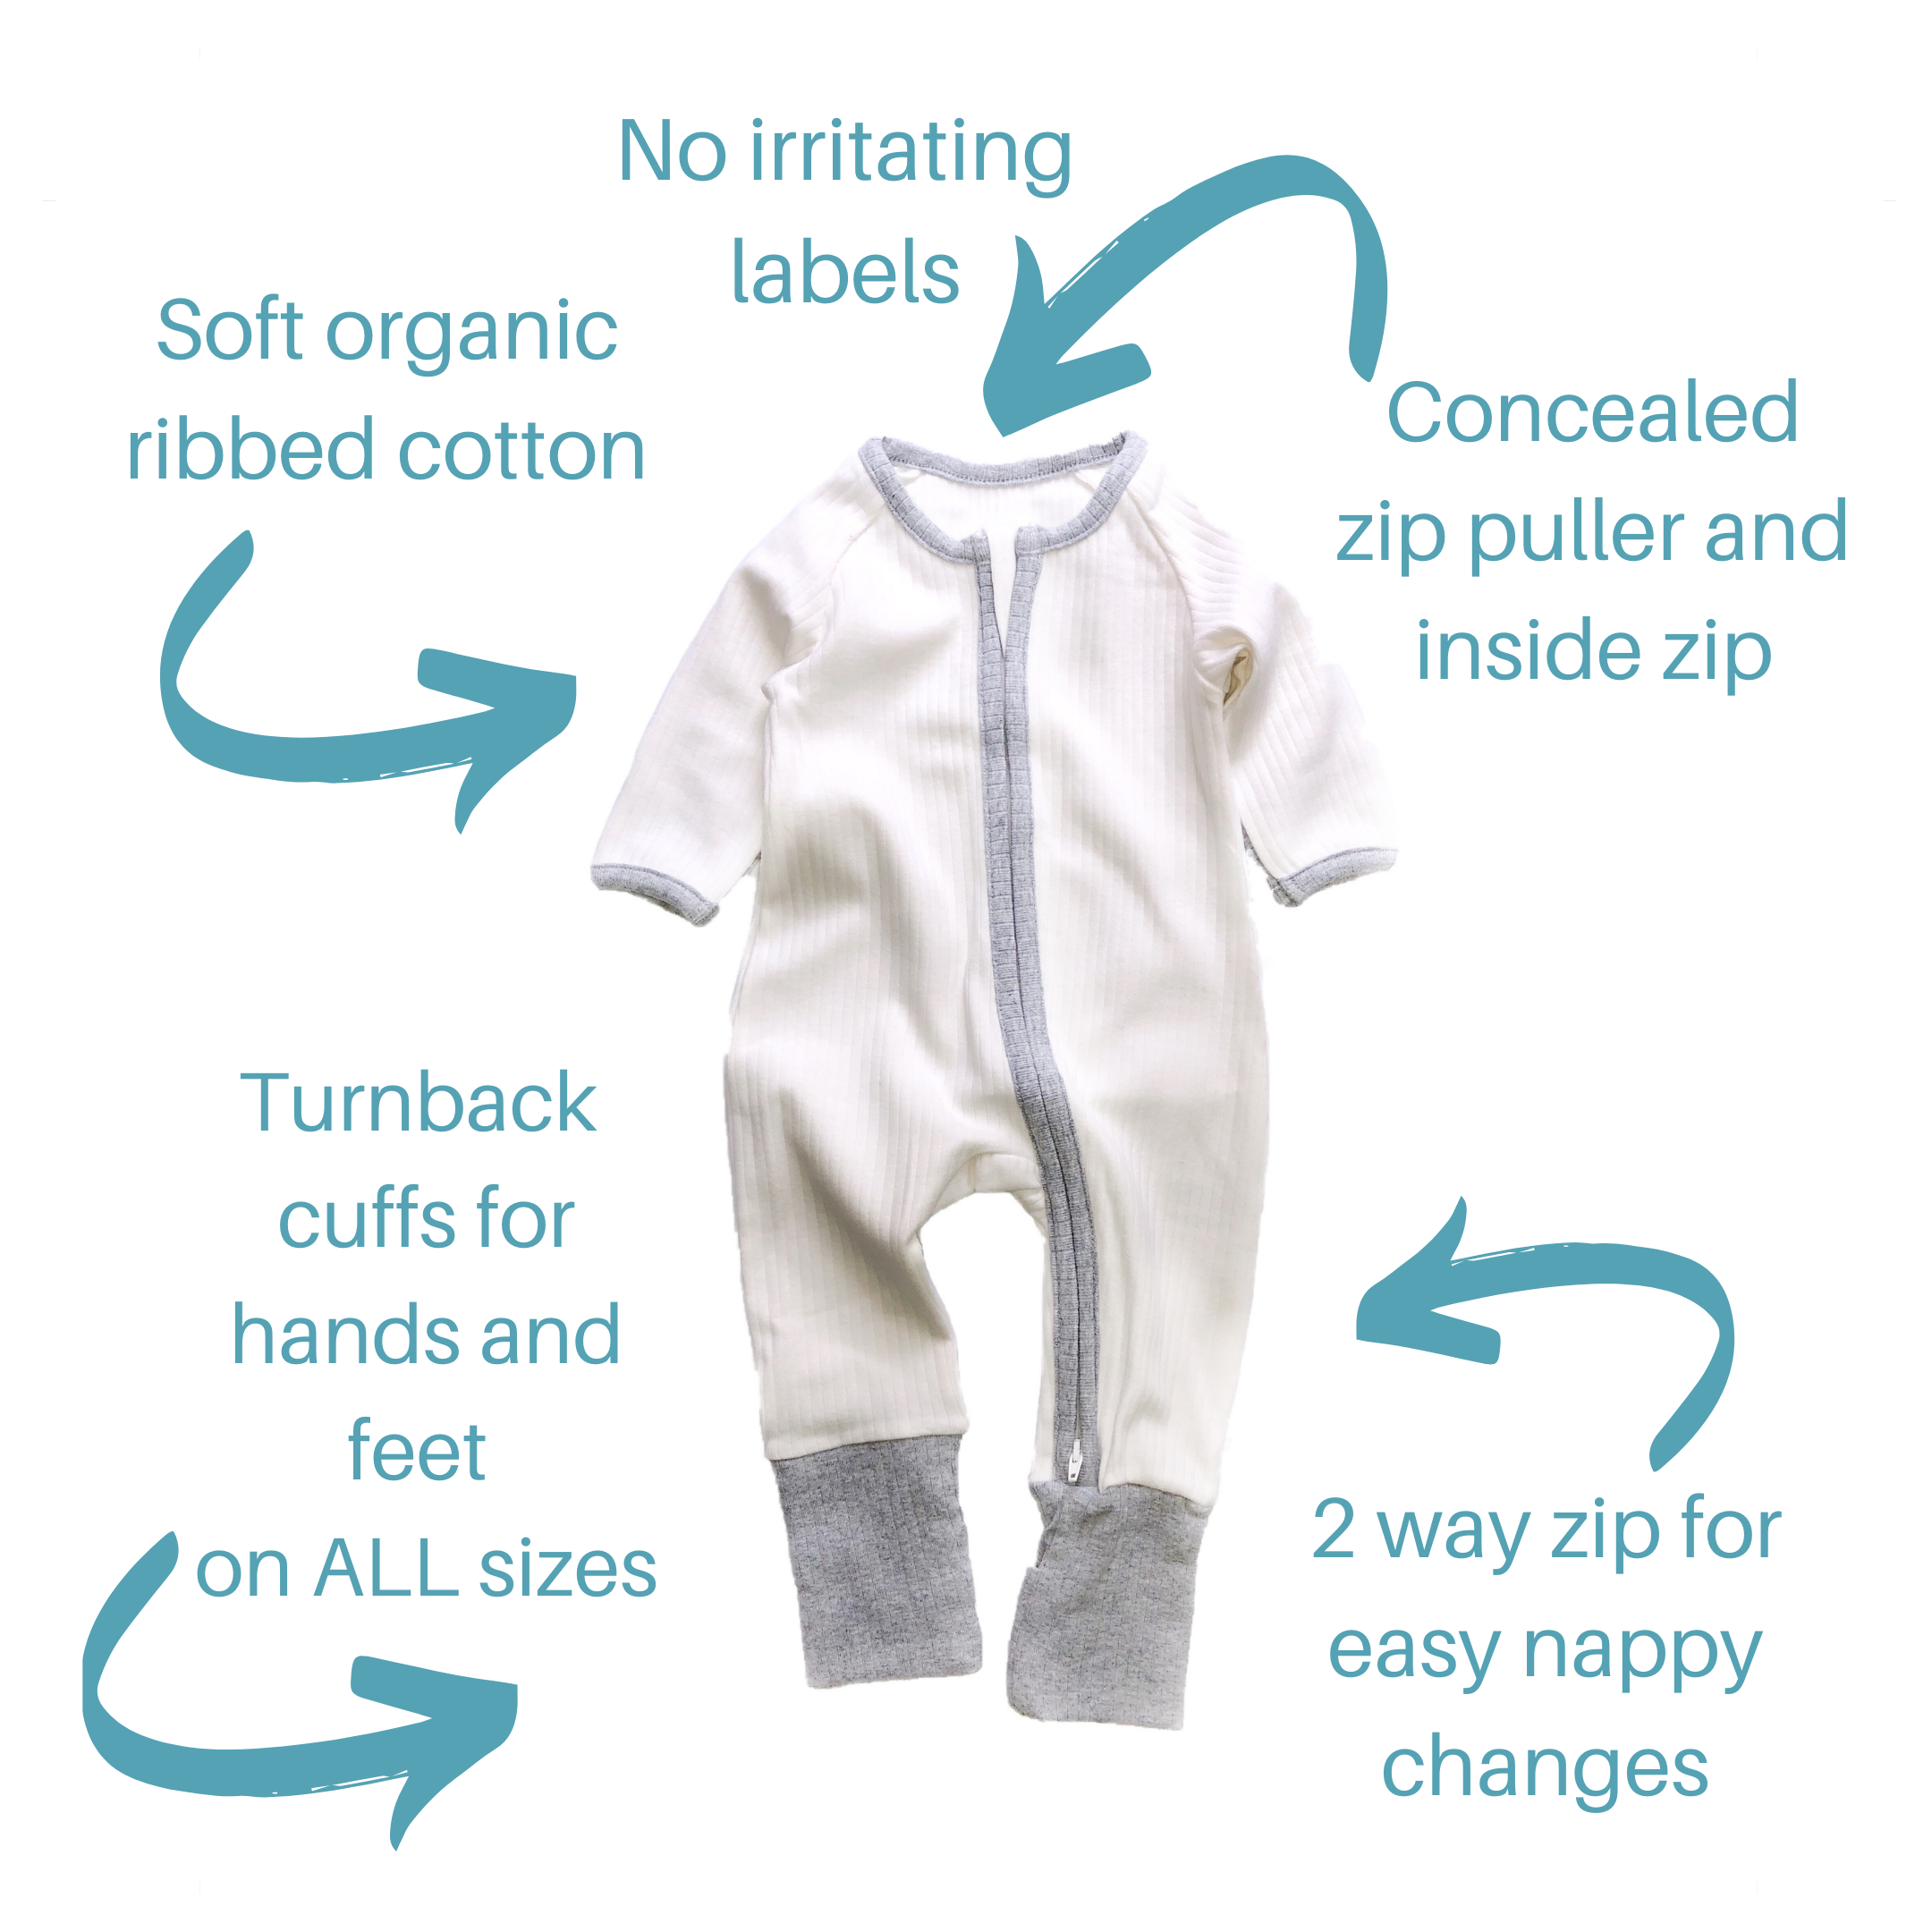 White And Grey Ribbed Zipped Footless Babygrow